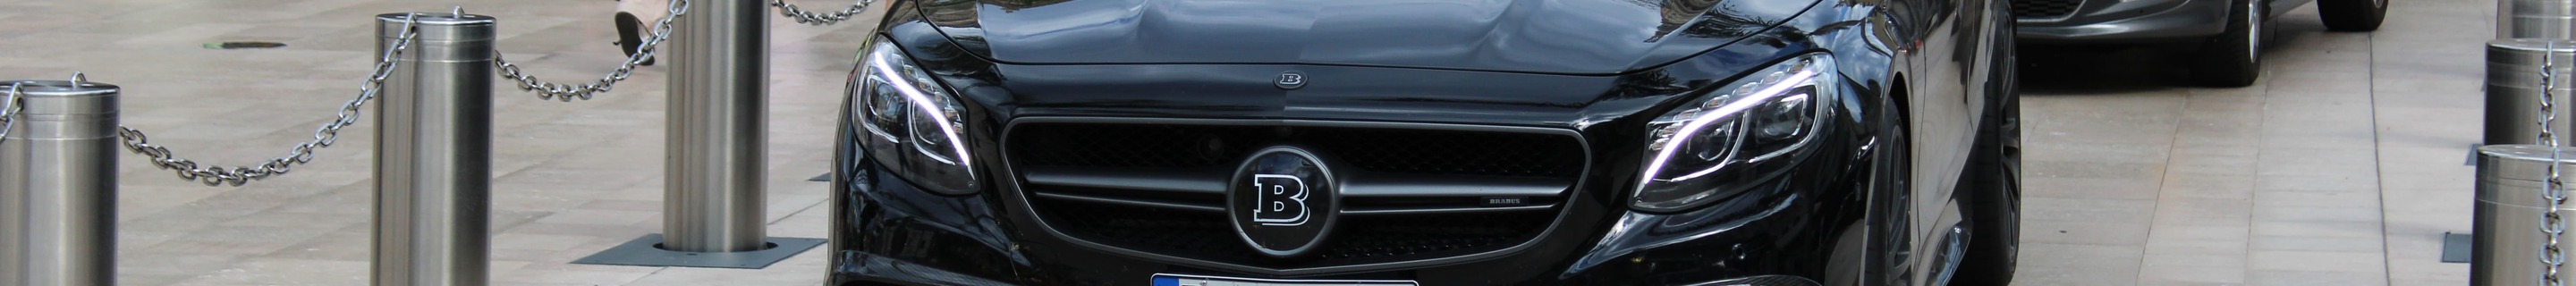 Mercedes-AMG Brabus 850 6.0 Biturbo Convertible A217